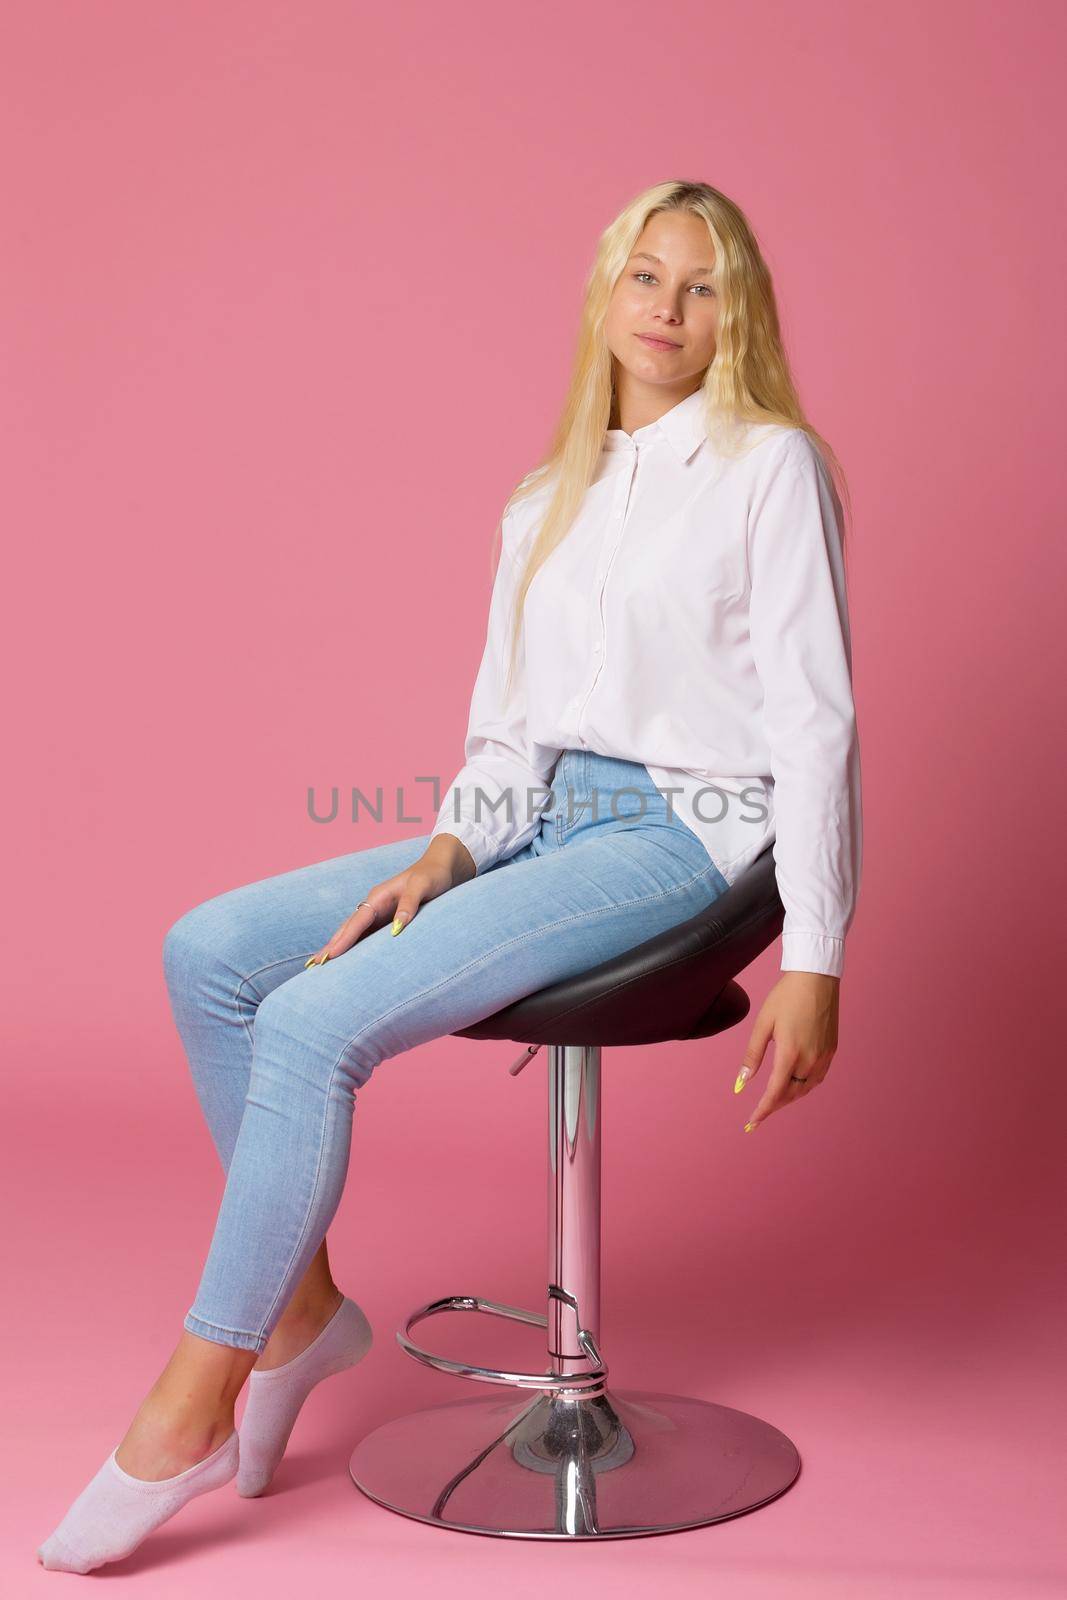 Cute Smiling Blonde Girl Sitting on High Chair in Studio by kolesnikov_studio